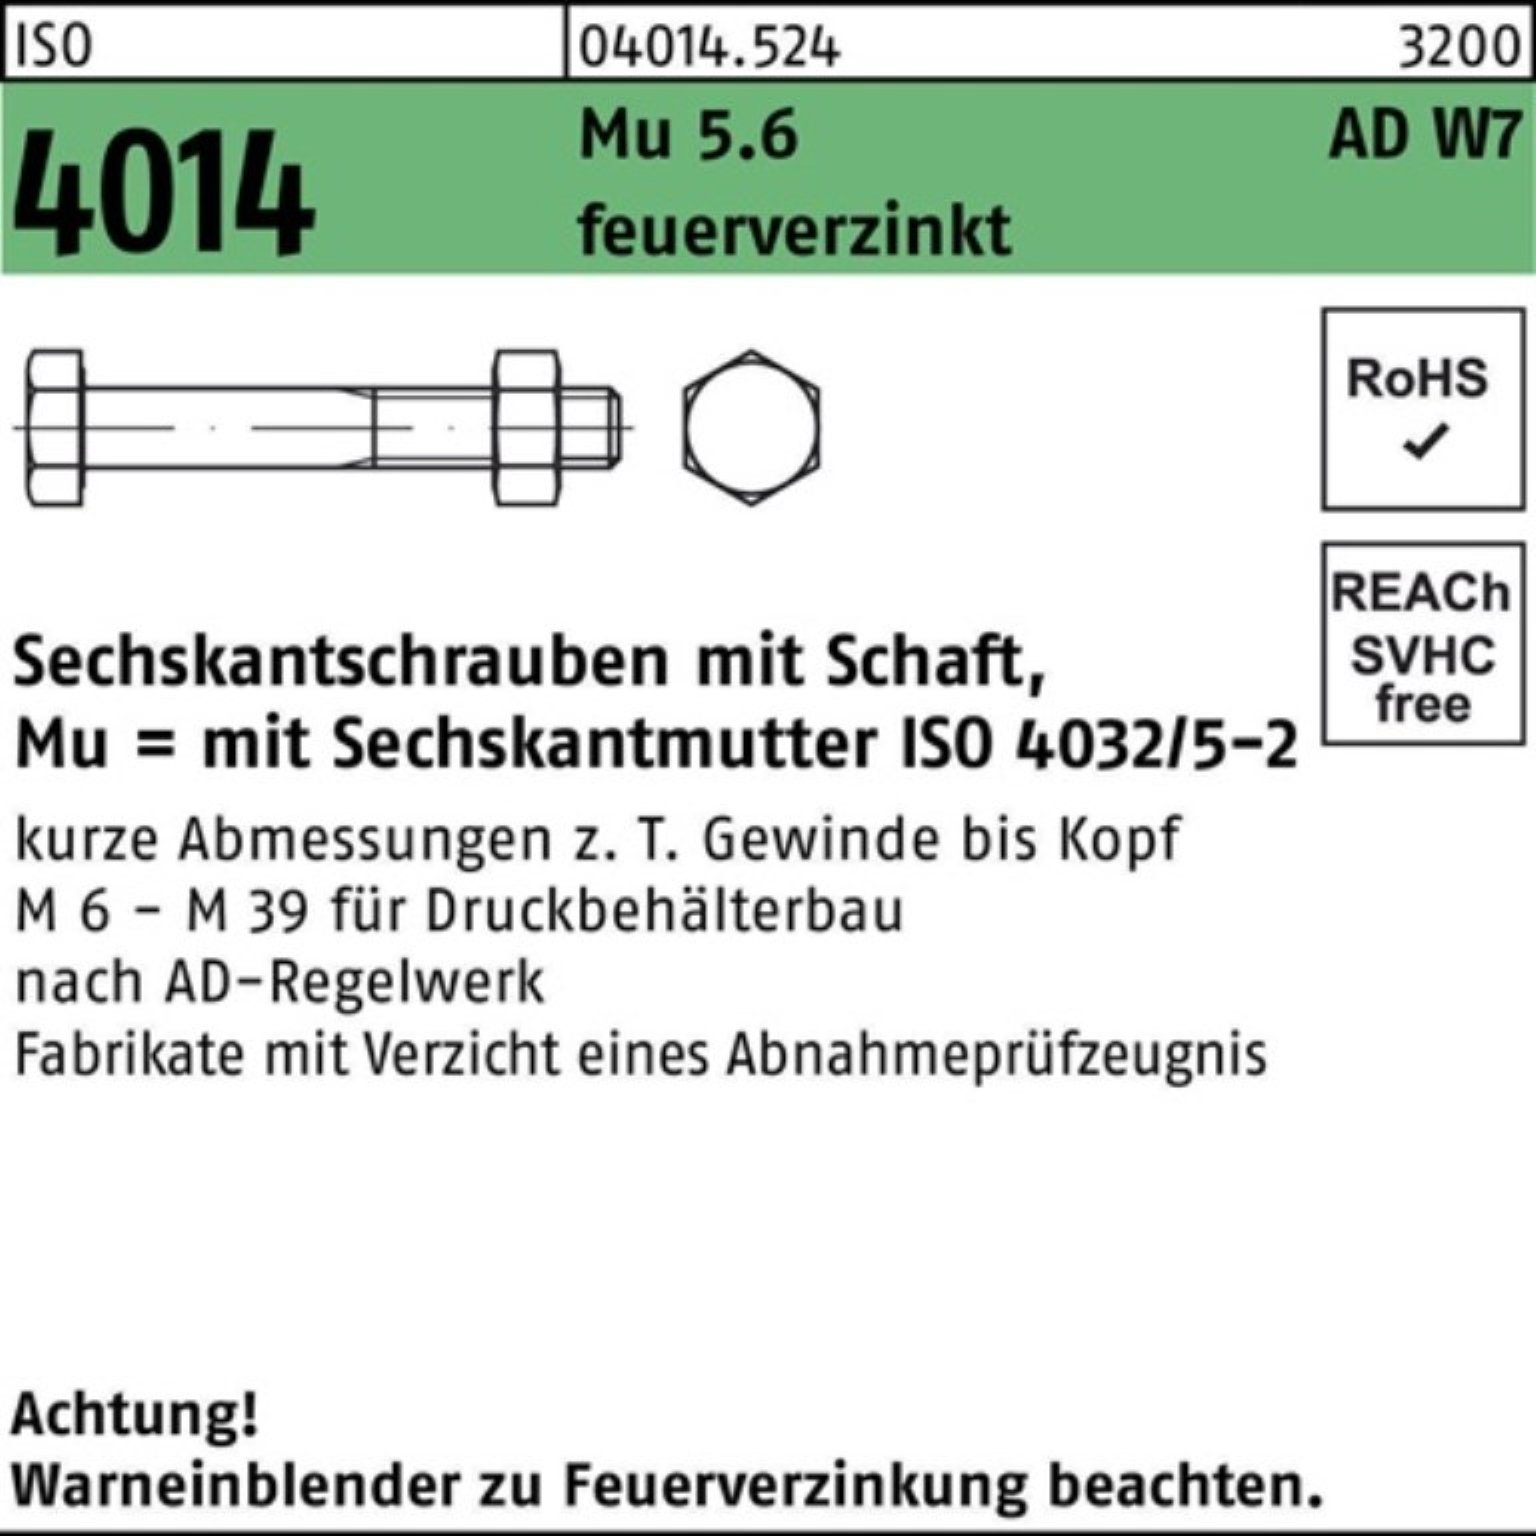 Bufab Sechskantschraube 100er Schaft 170 Sechskantschraube Mu 5.6 Pack M16x W7 ISO 4014 feuerv